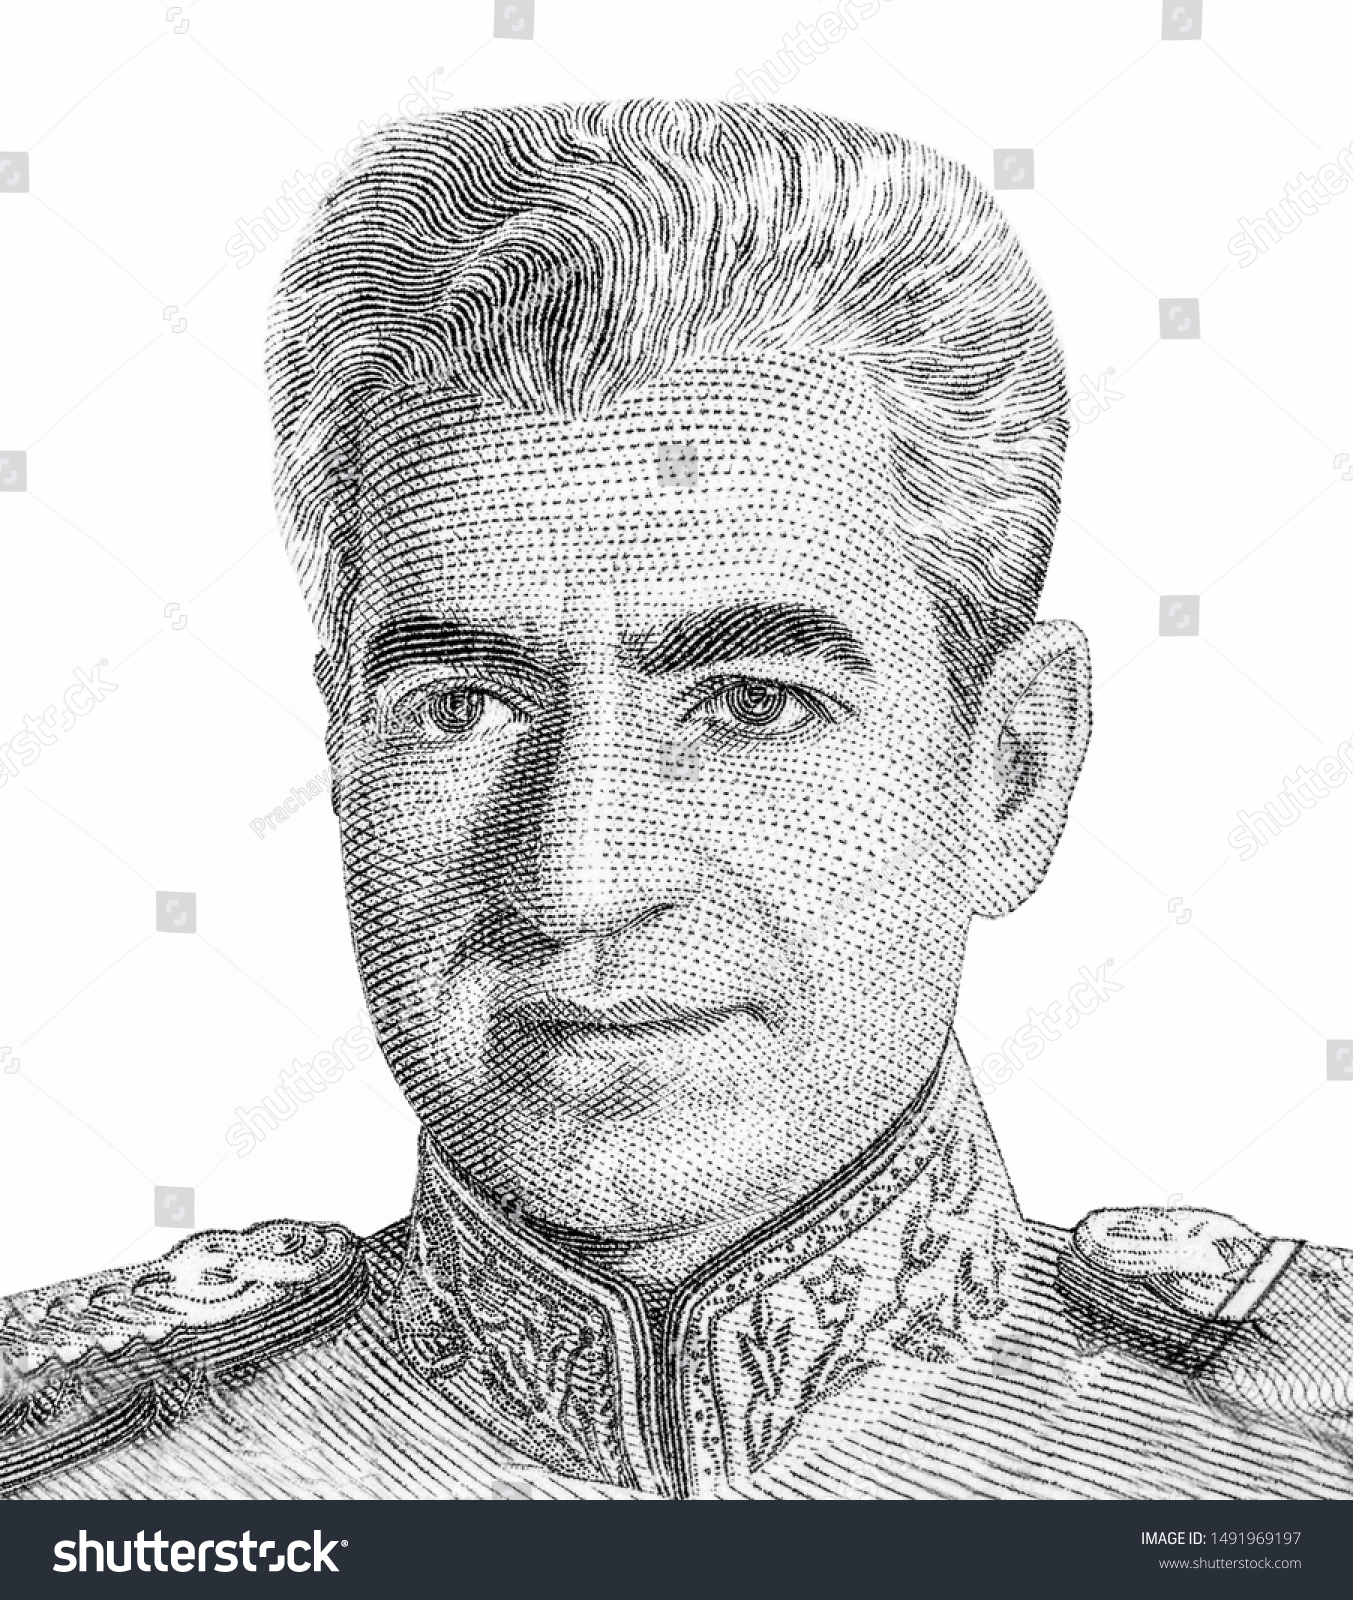 Mohammad Reza Shah Pahlavi Army Uniform Stockfoto 1491969197 | Shutterstock